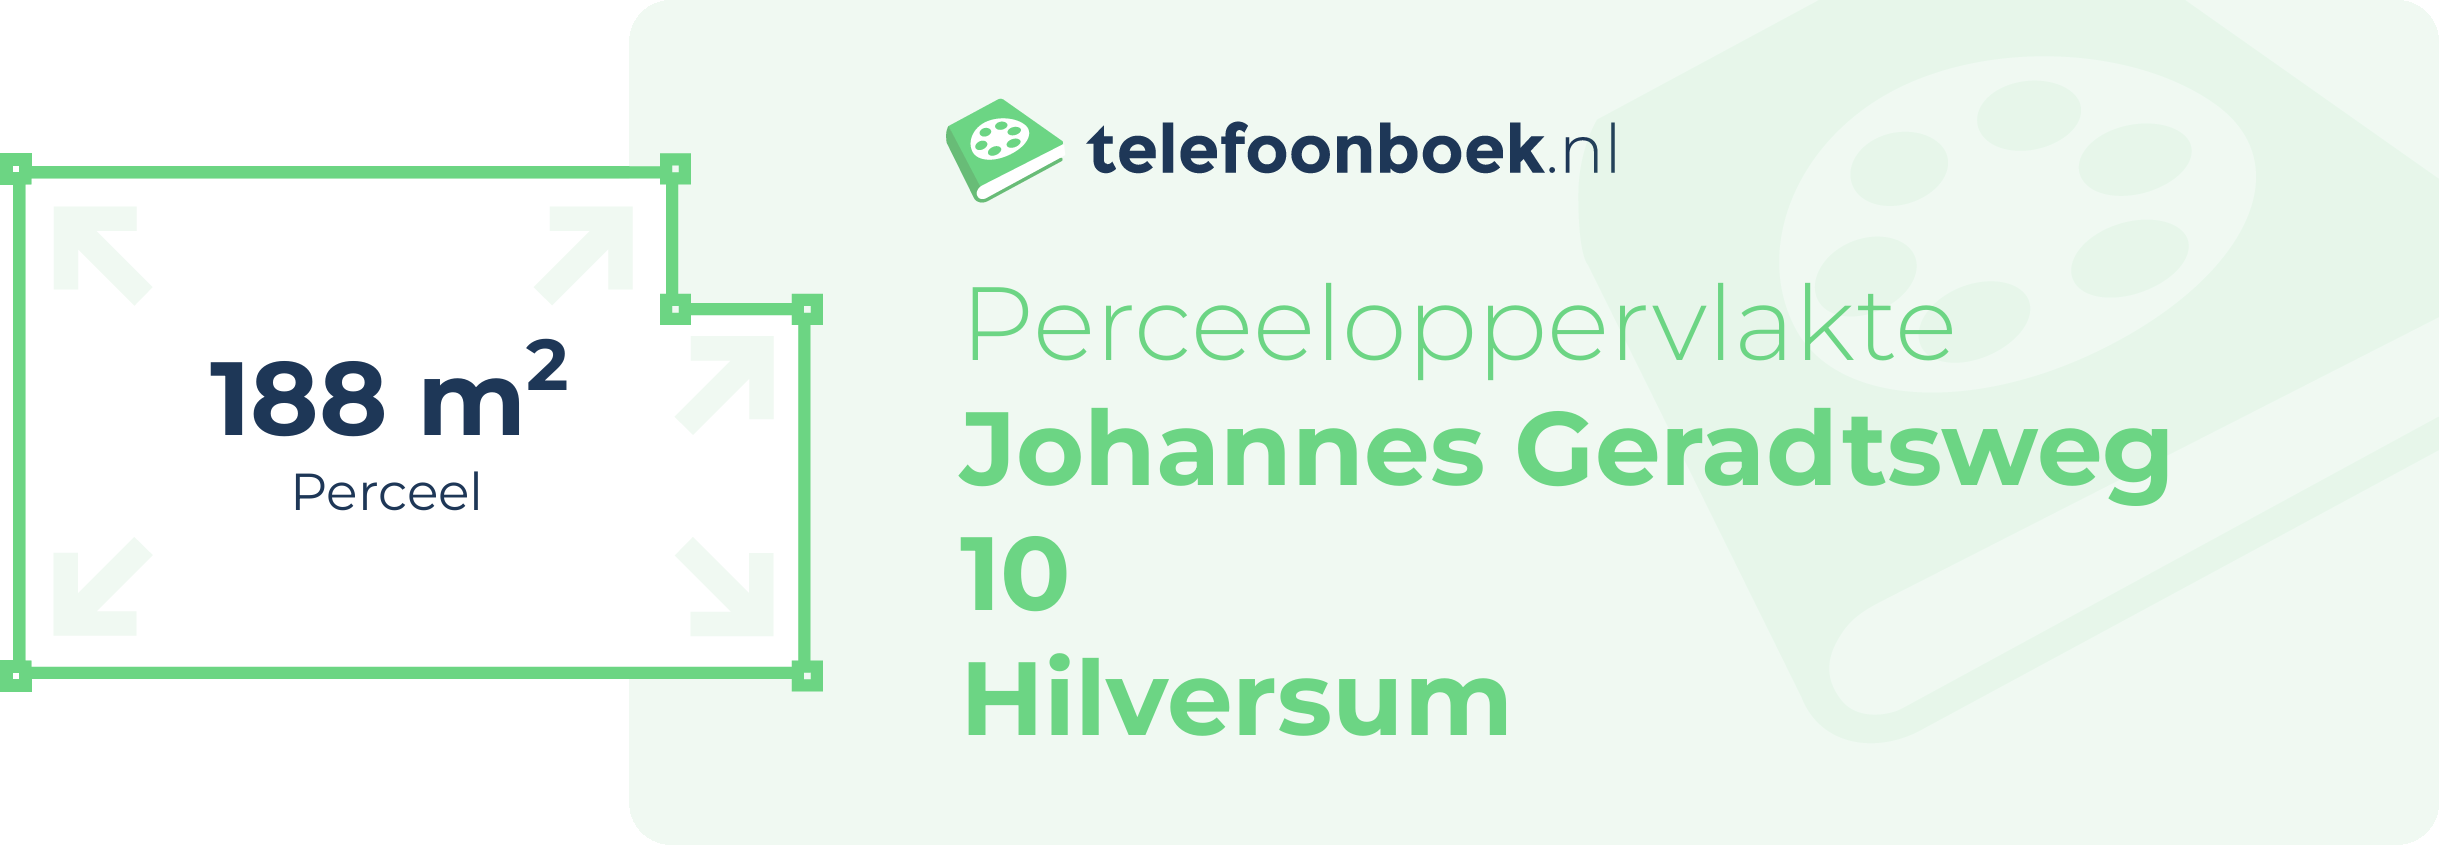 Perceeloppervlakte Johannes Geradtsweg 10 Hilversum